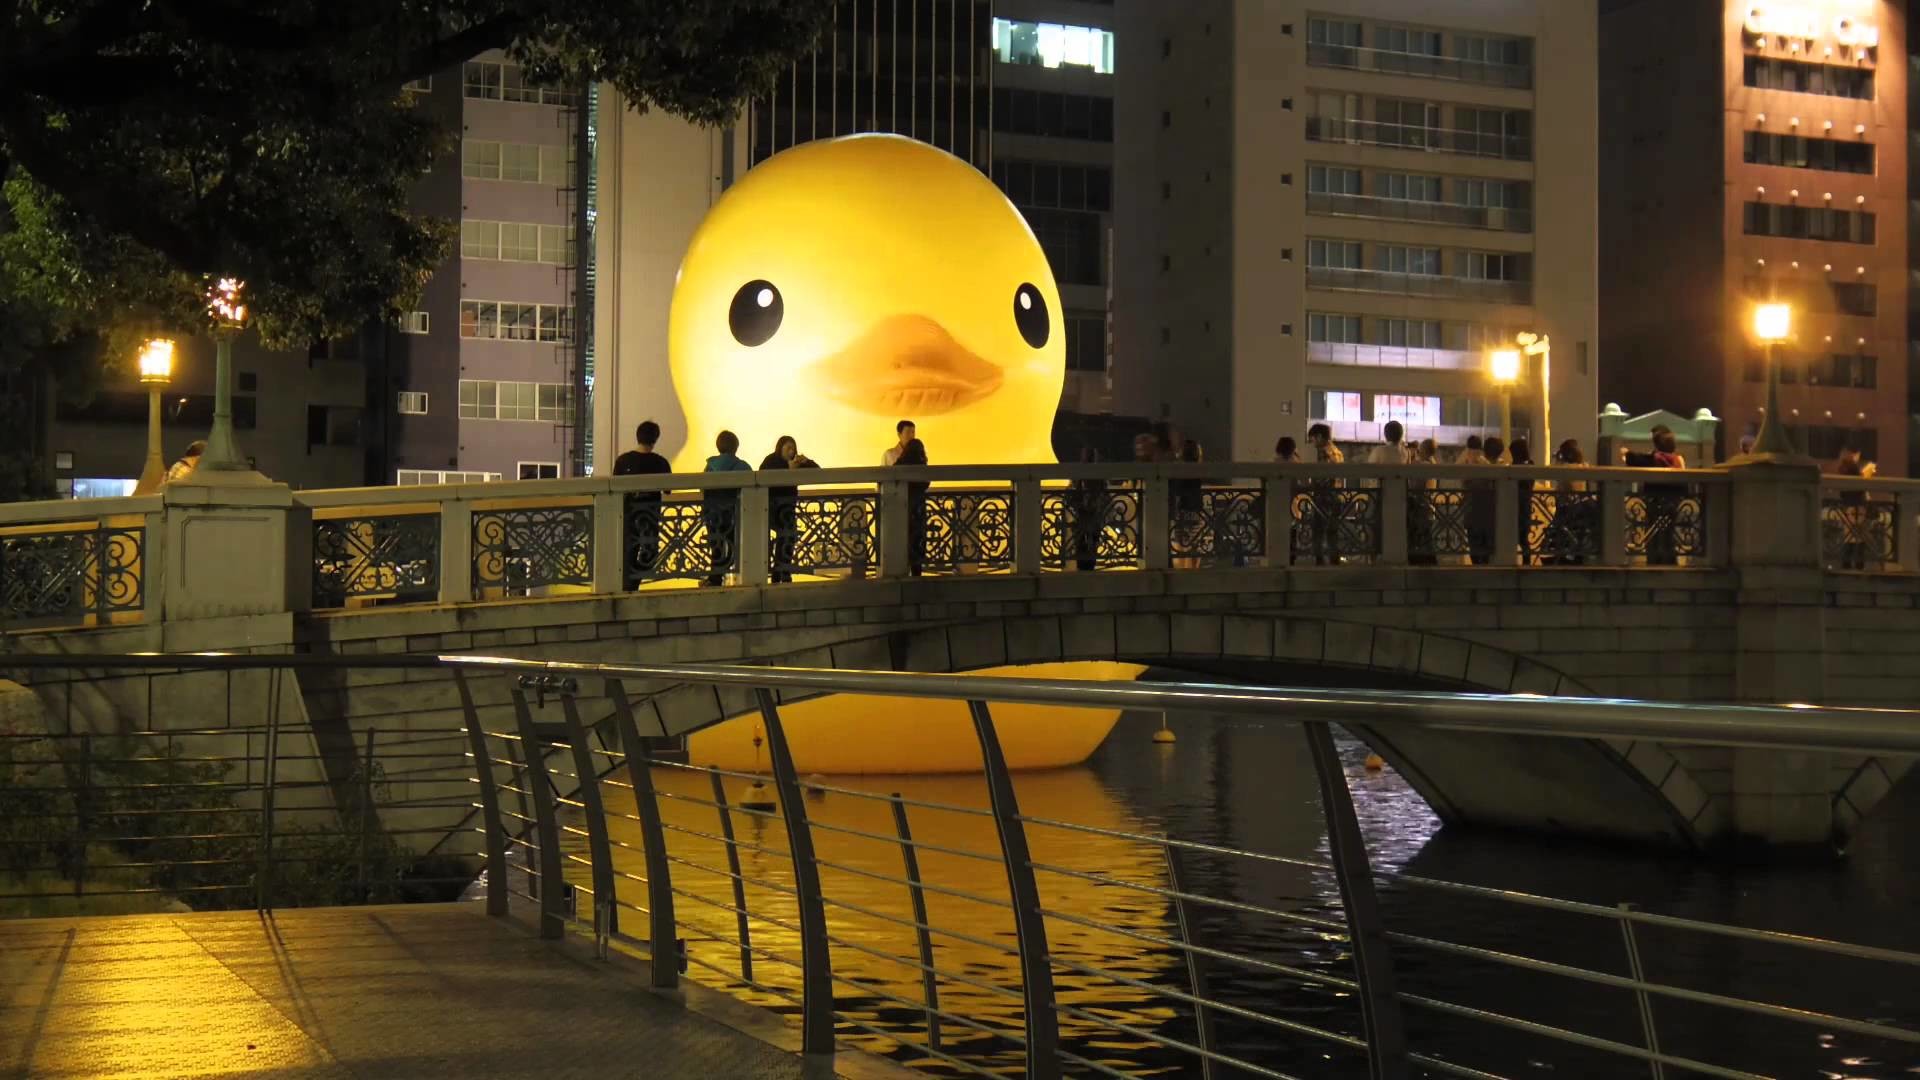 1920x1080 Giant rubber duck at Nakanoshima park, Osaka, Japan 2015 [Time-lapse video]